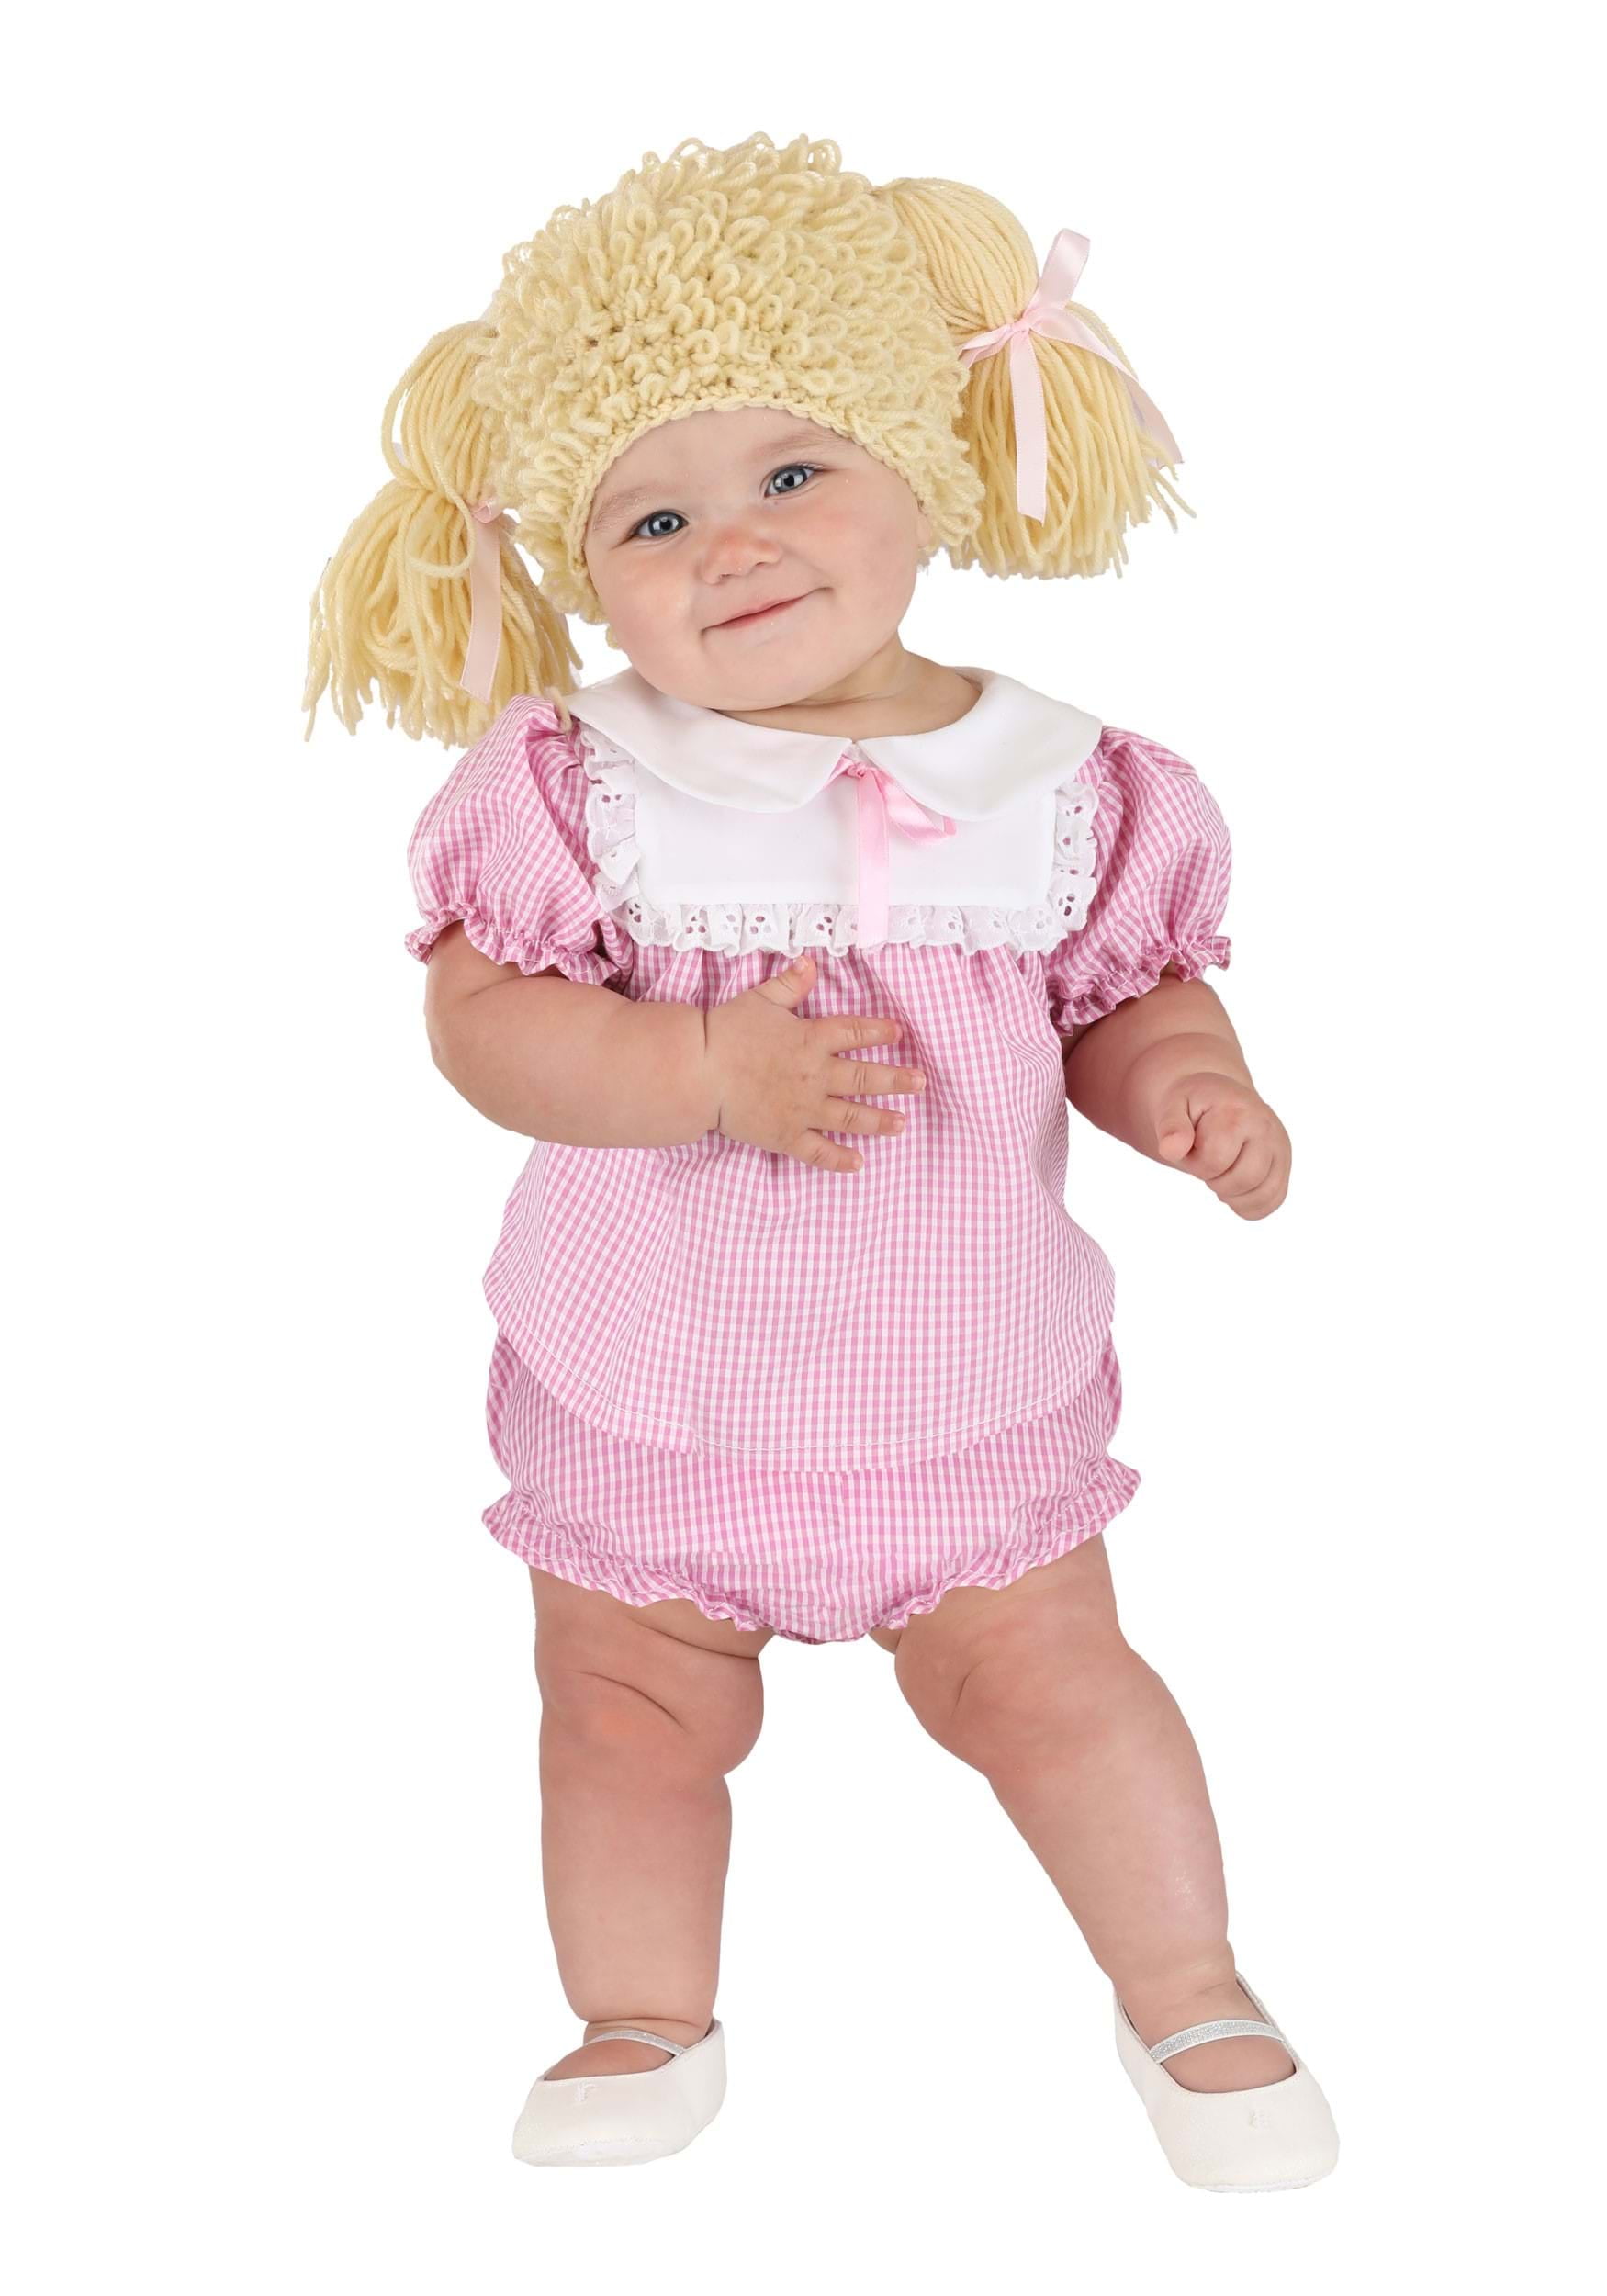 Precious Pink Wabbit Infant Newborn Costume